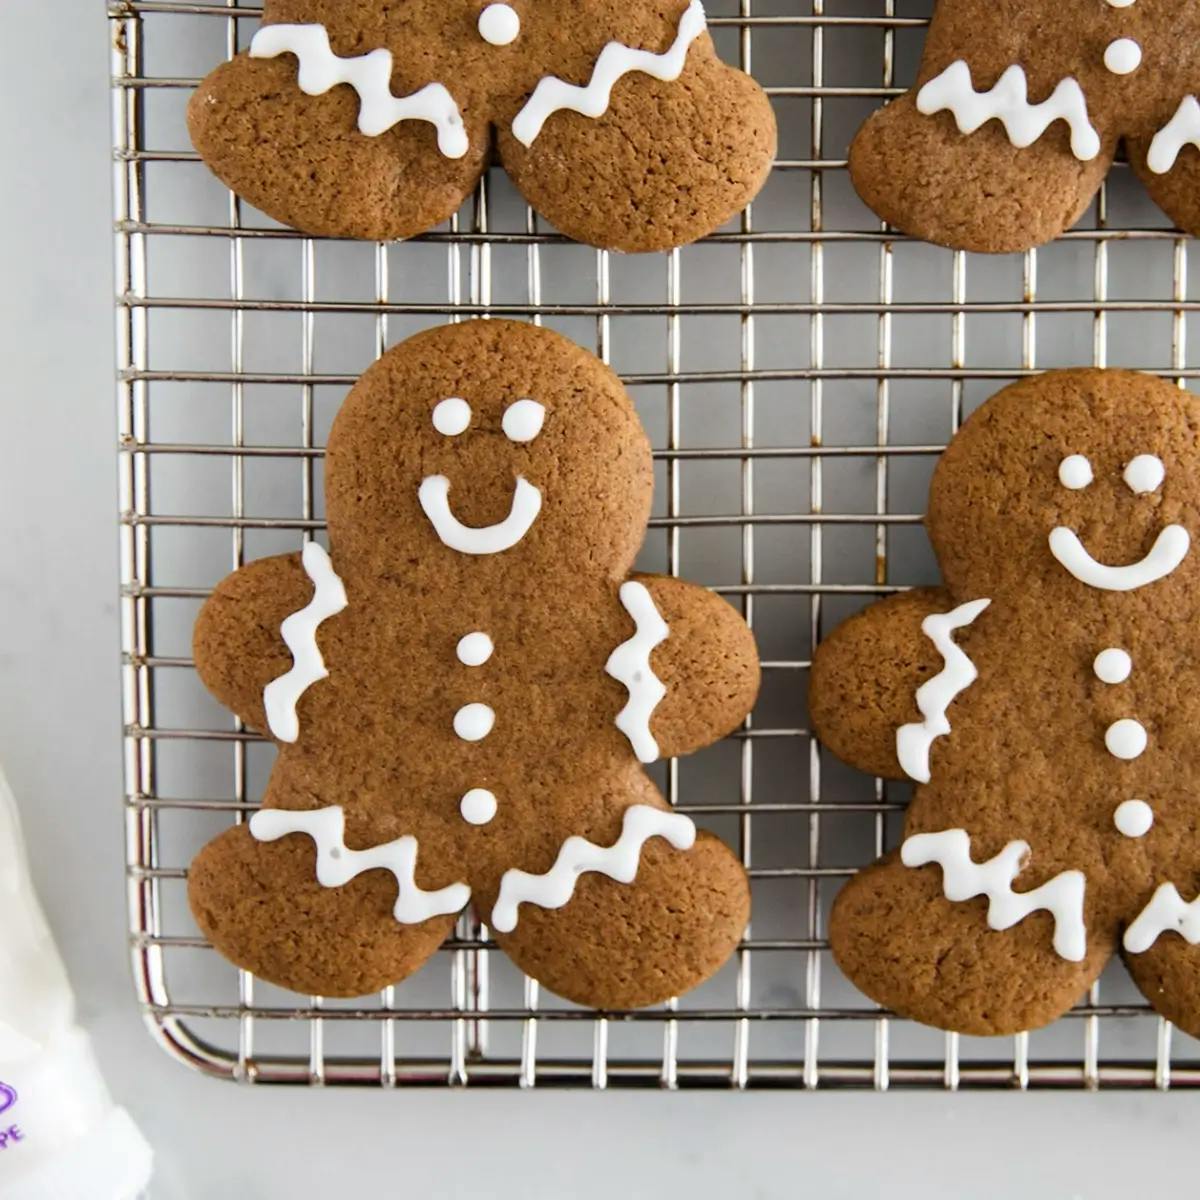 Iced Gingerbread Men cookies.